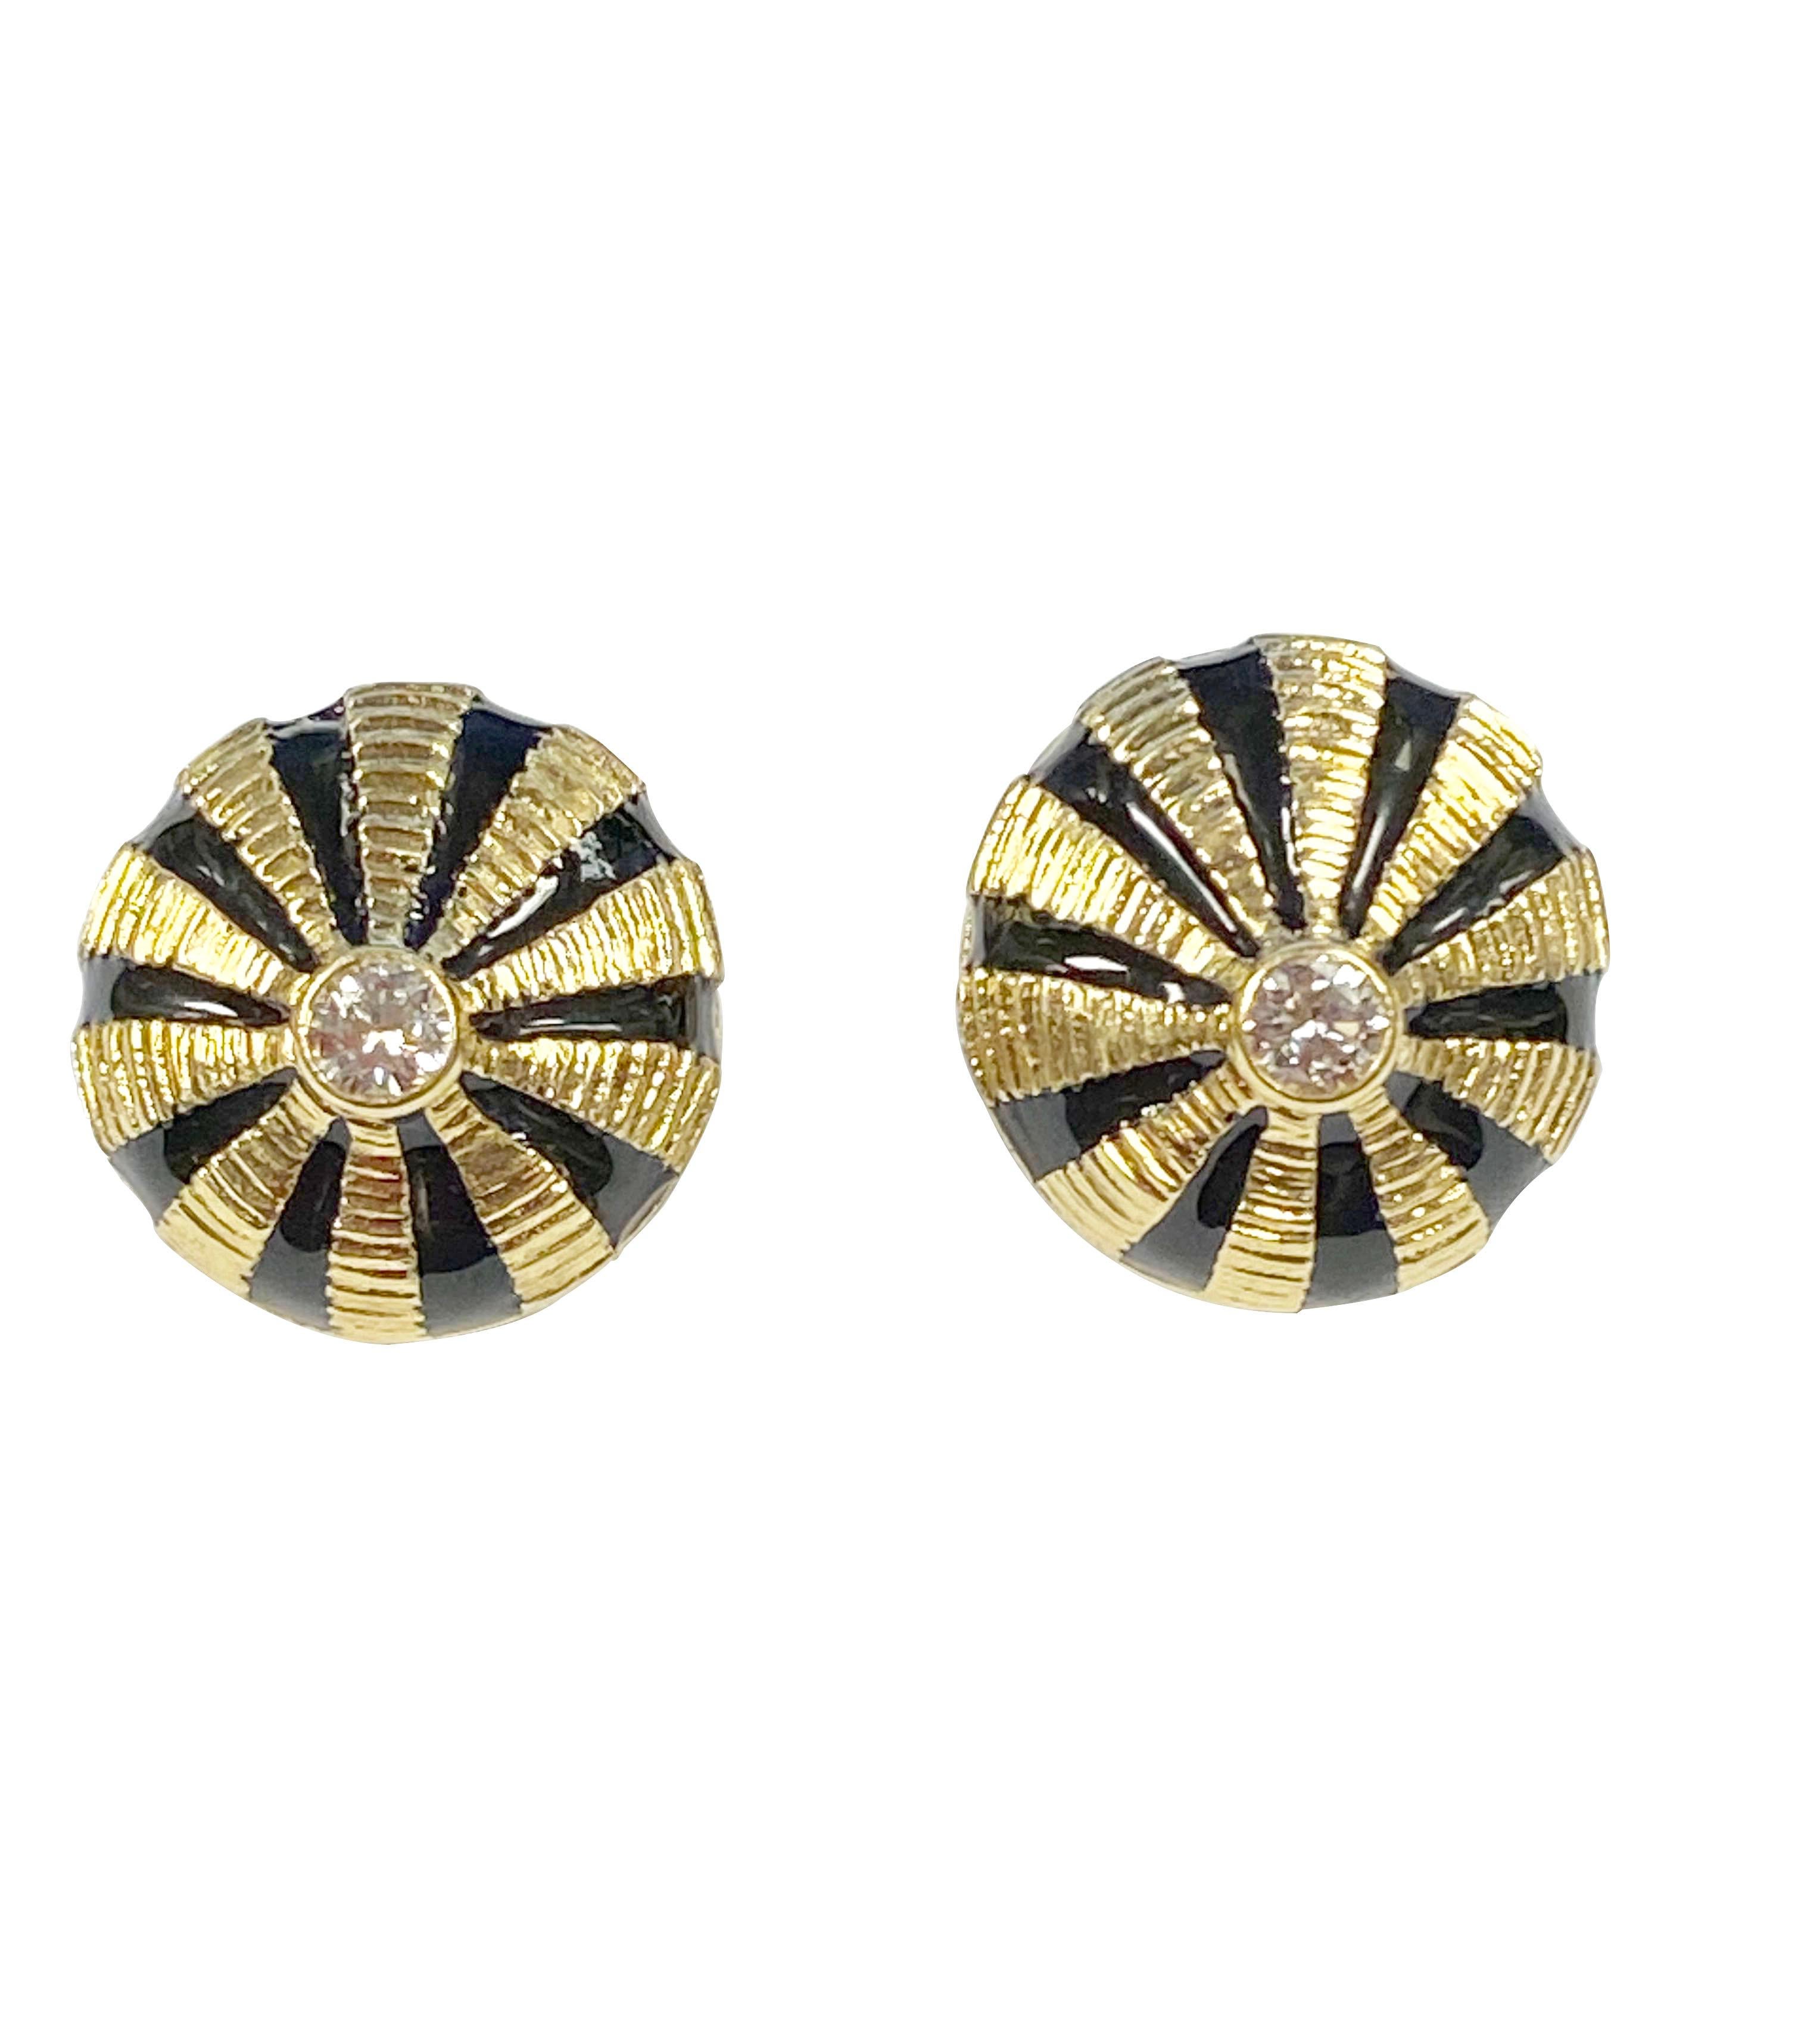 Tiffany & Company Schlumberger Gold Diamond and Enamel Earrings 1